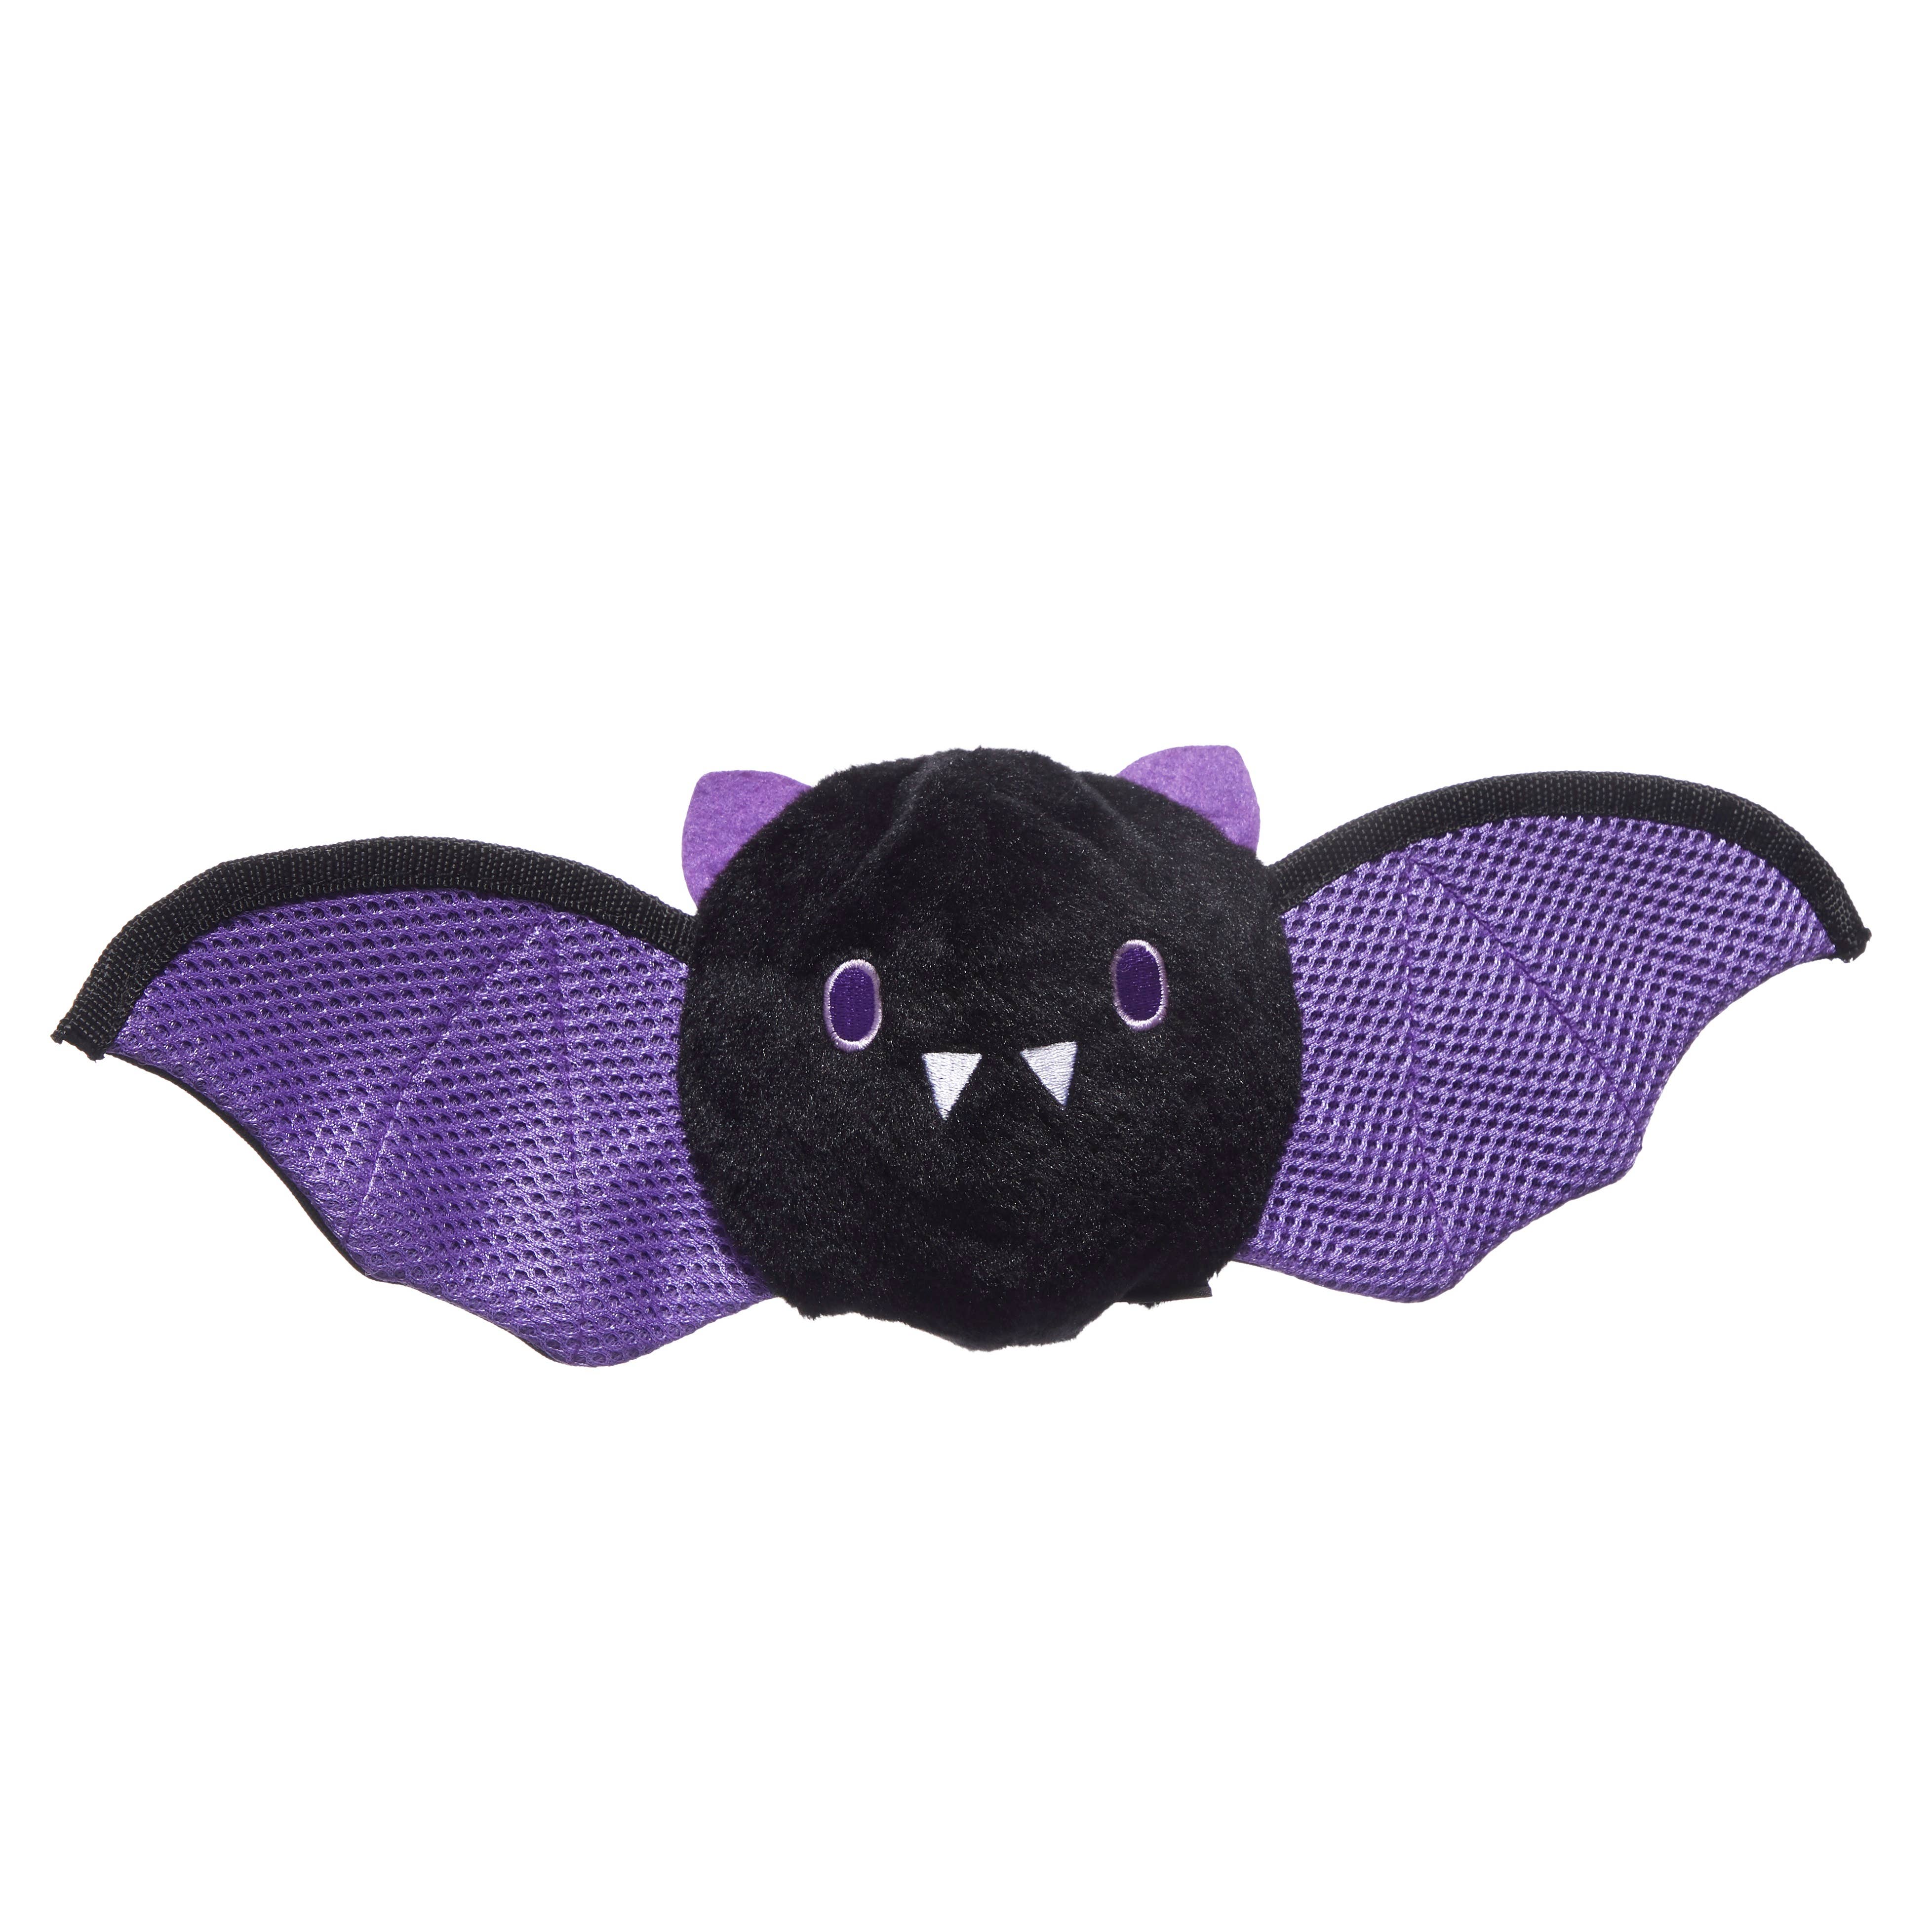 BARK Bram the Bat (small)